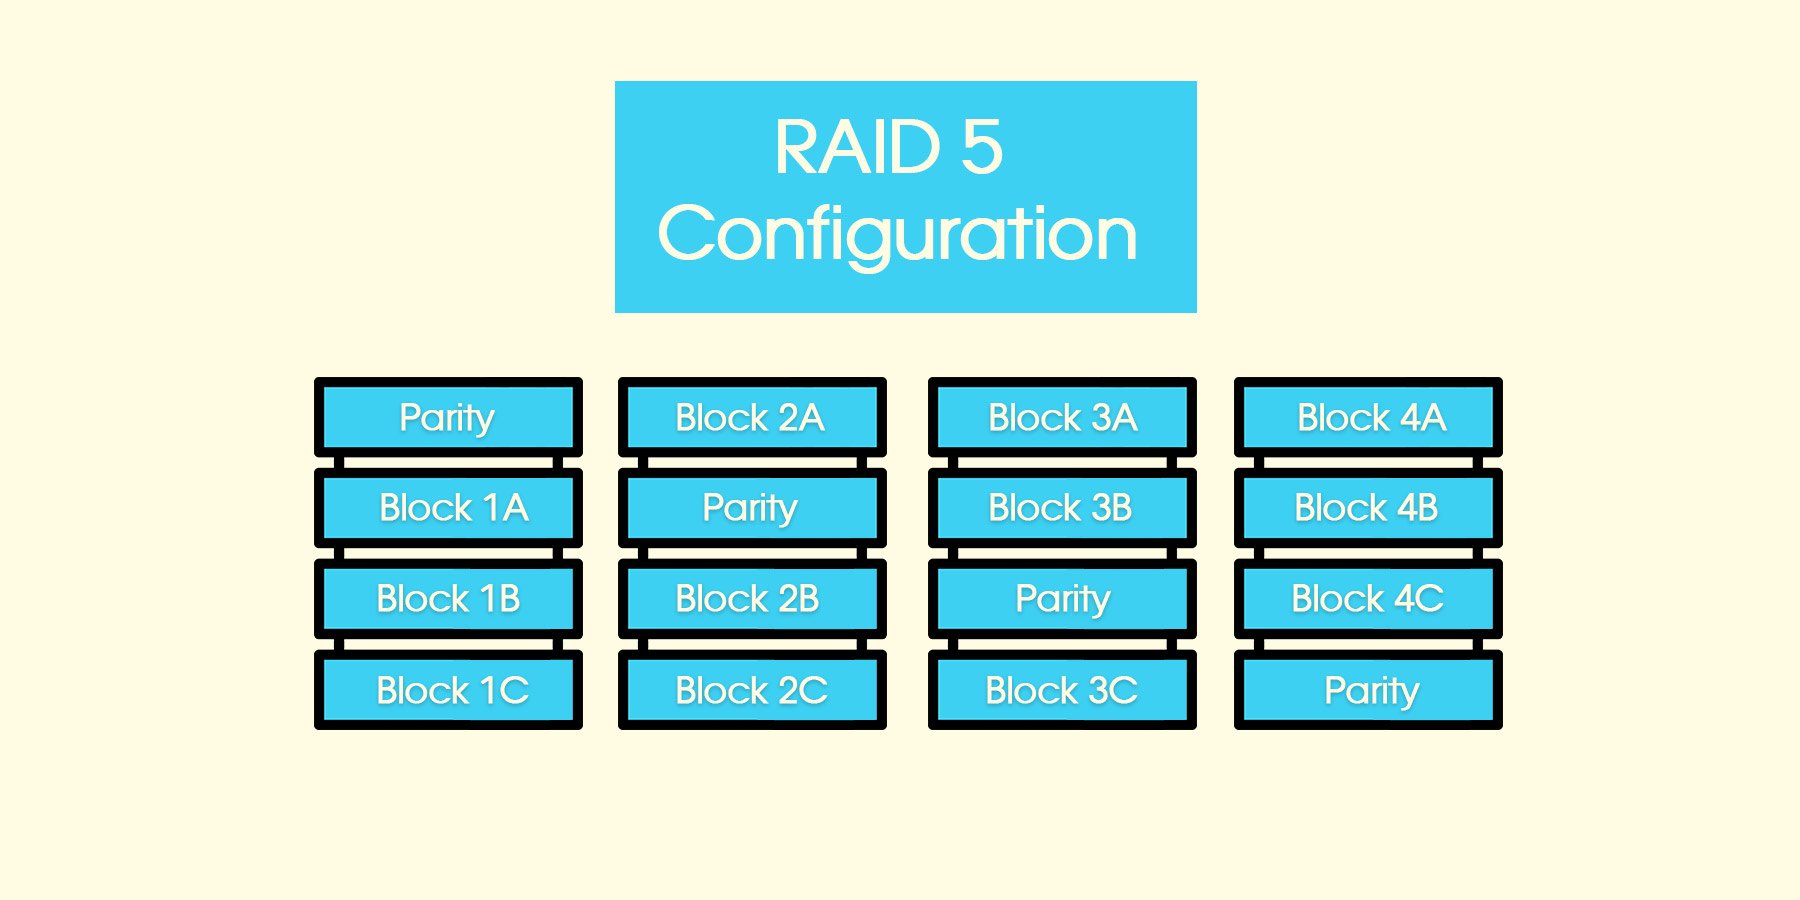 RAID 5 Configuration